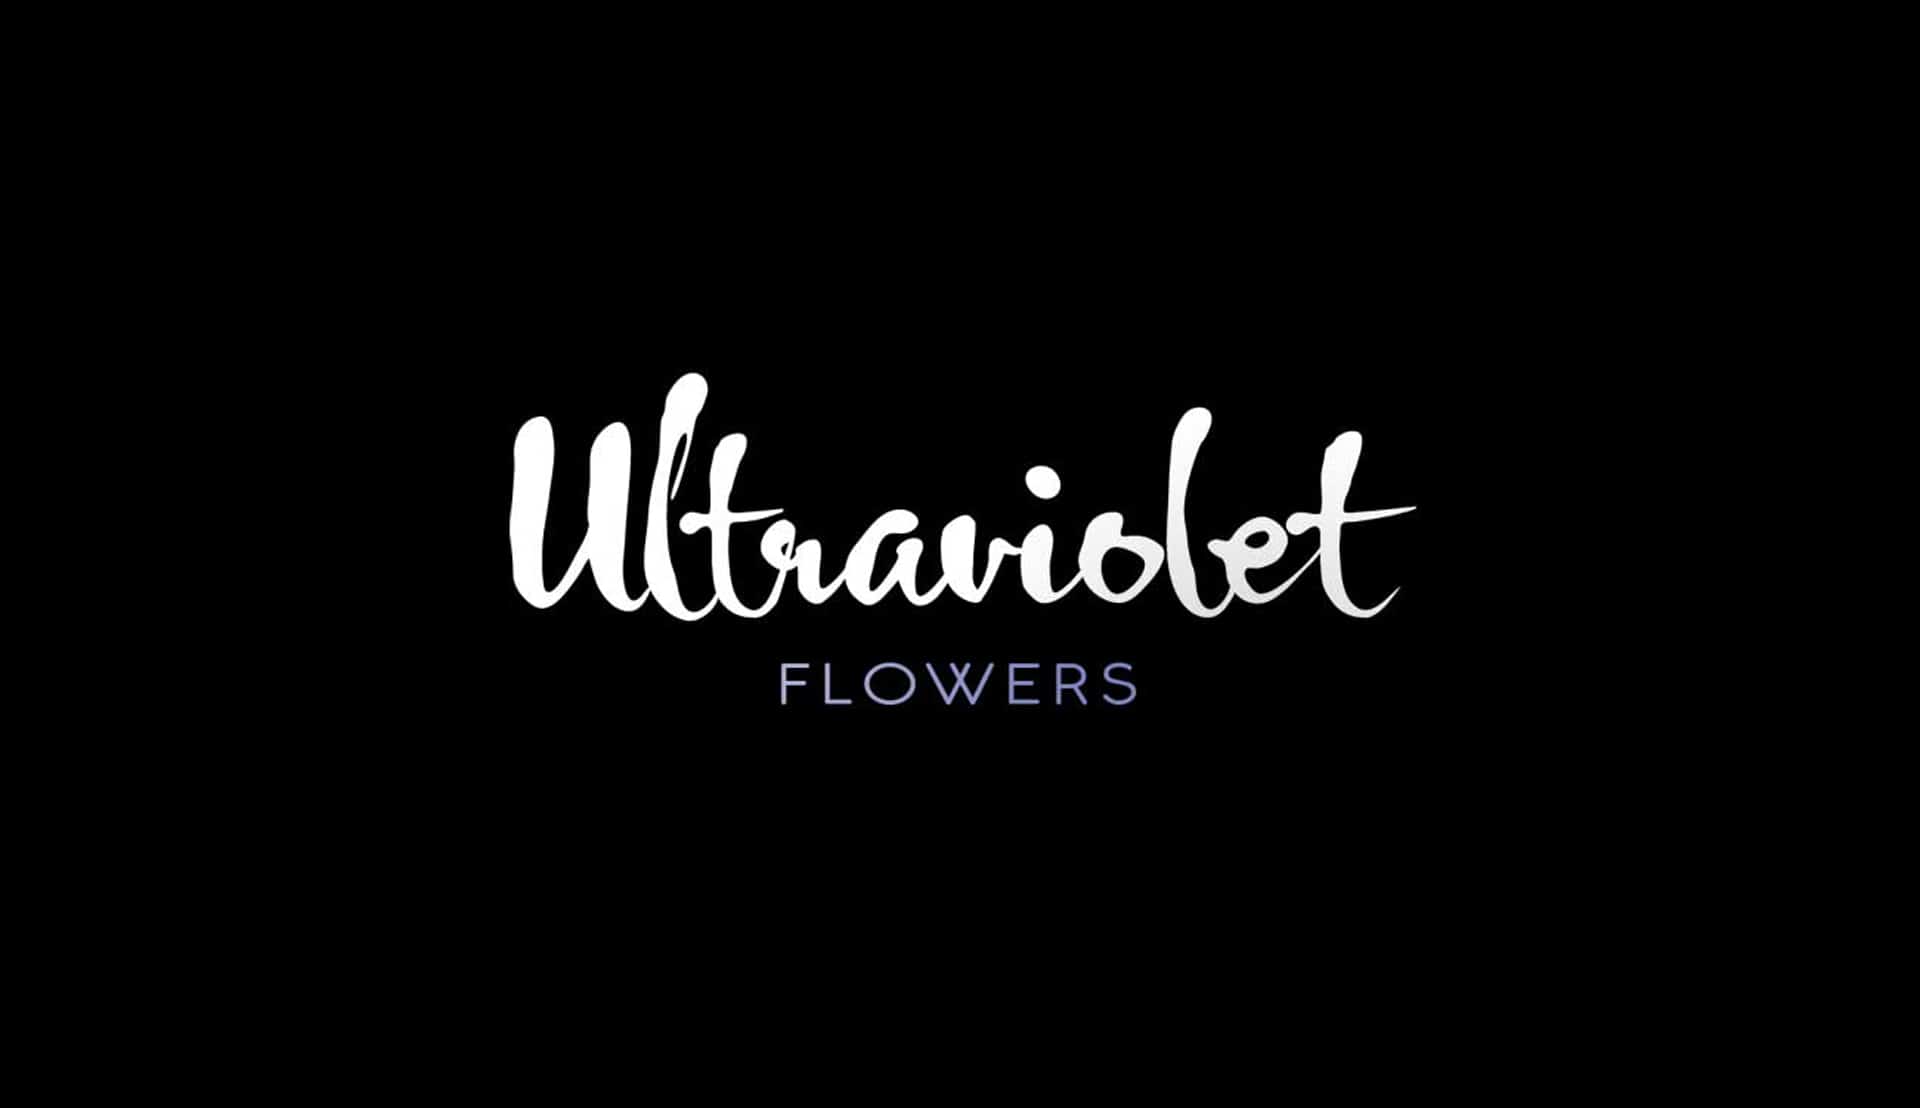 TrueOutput - Ultraviolet Flowers